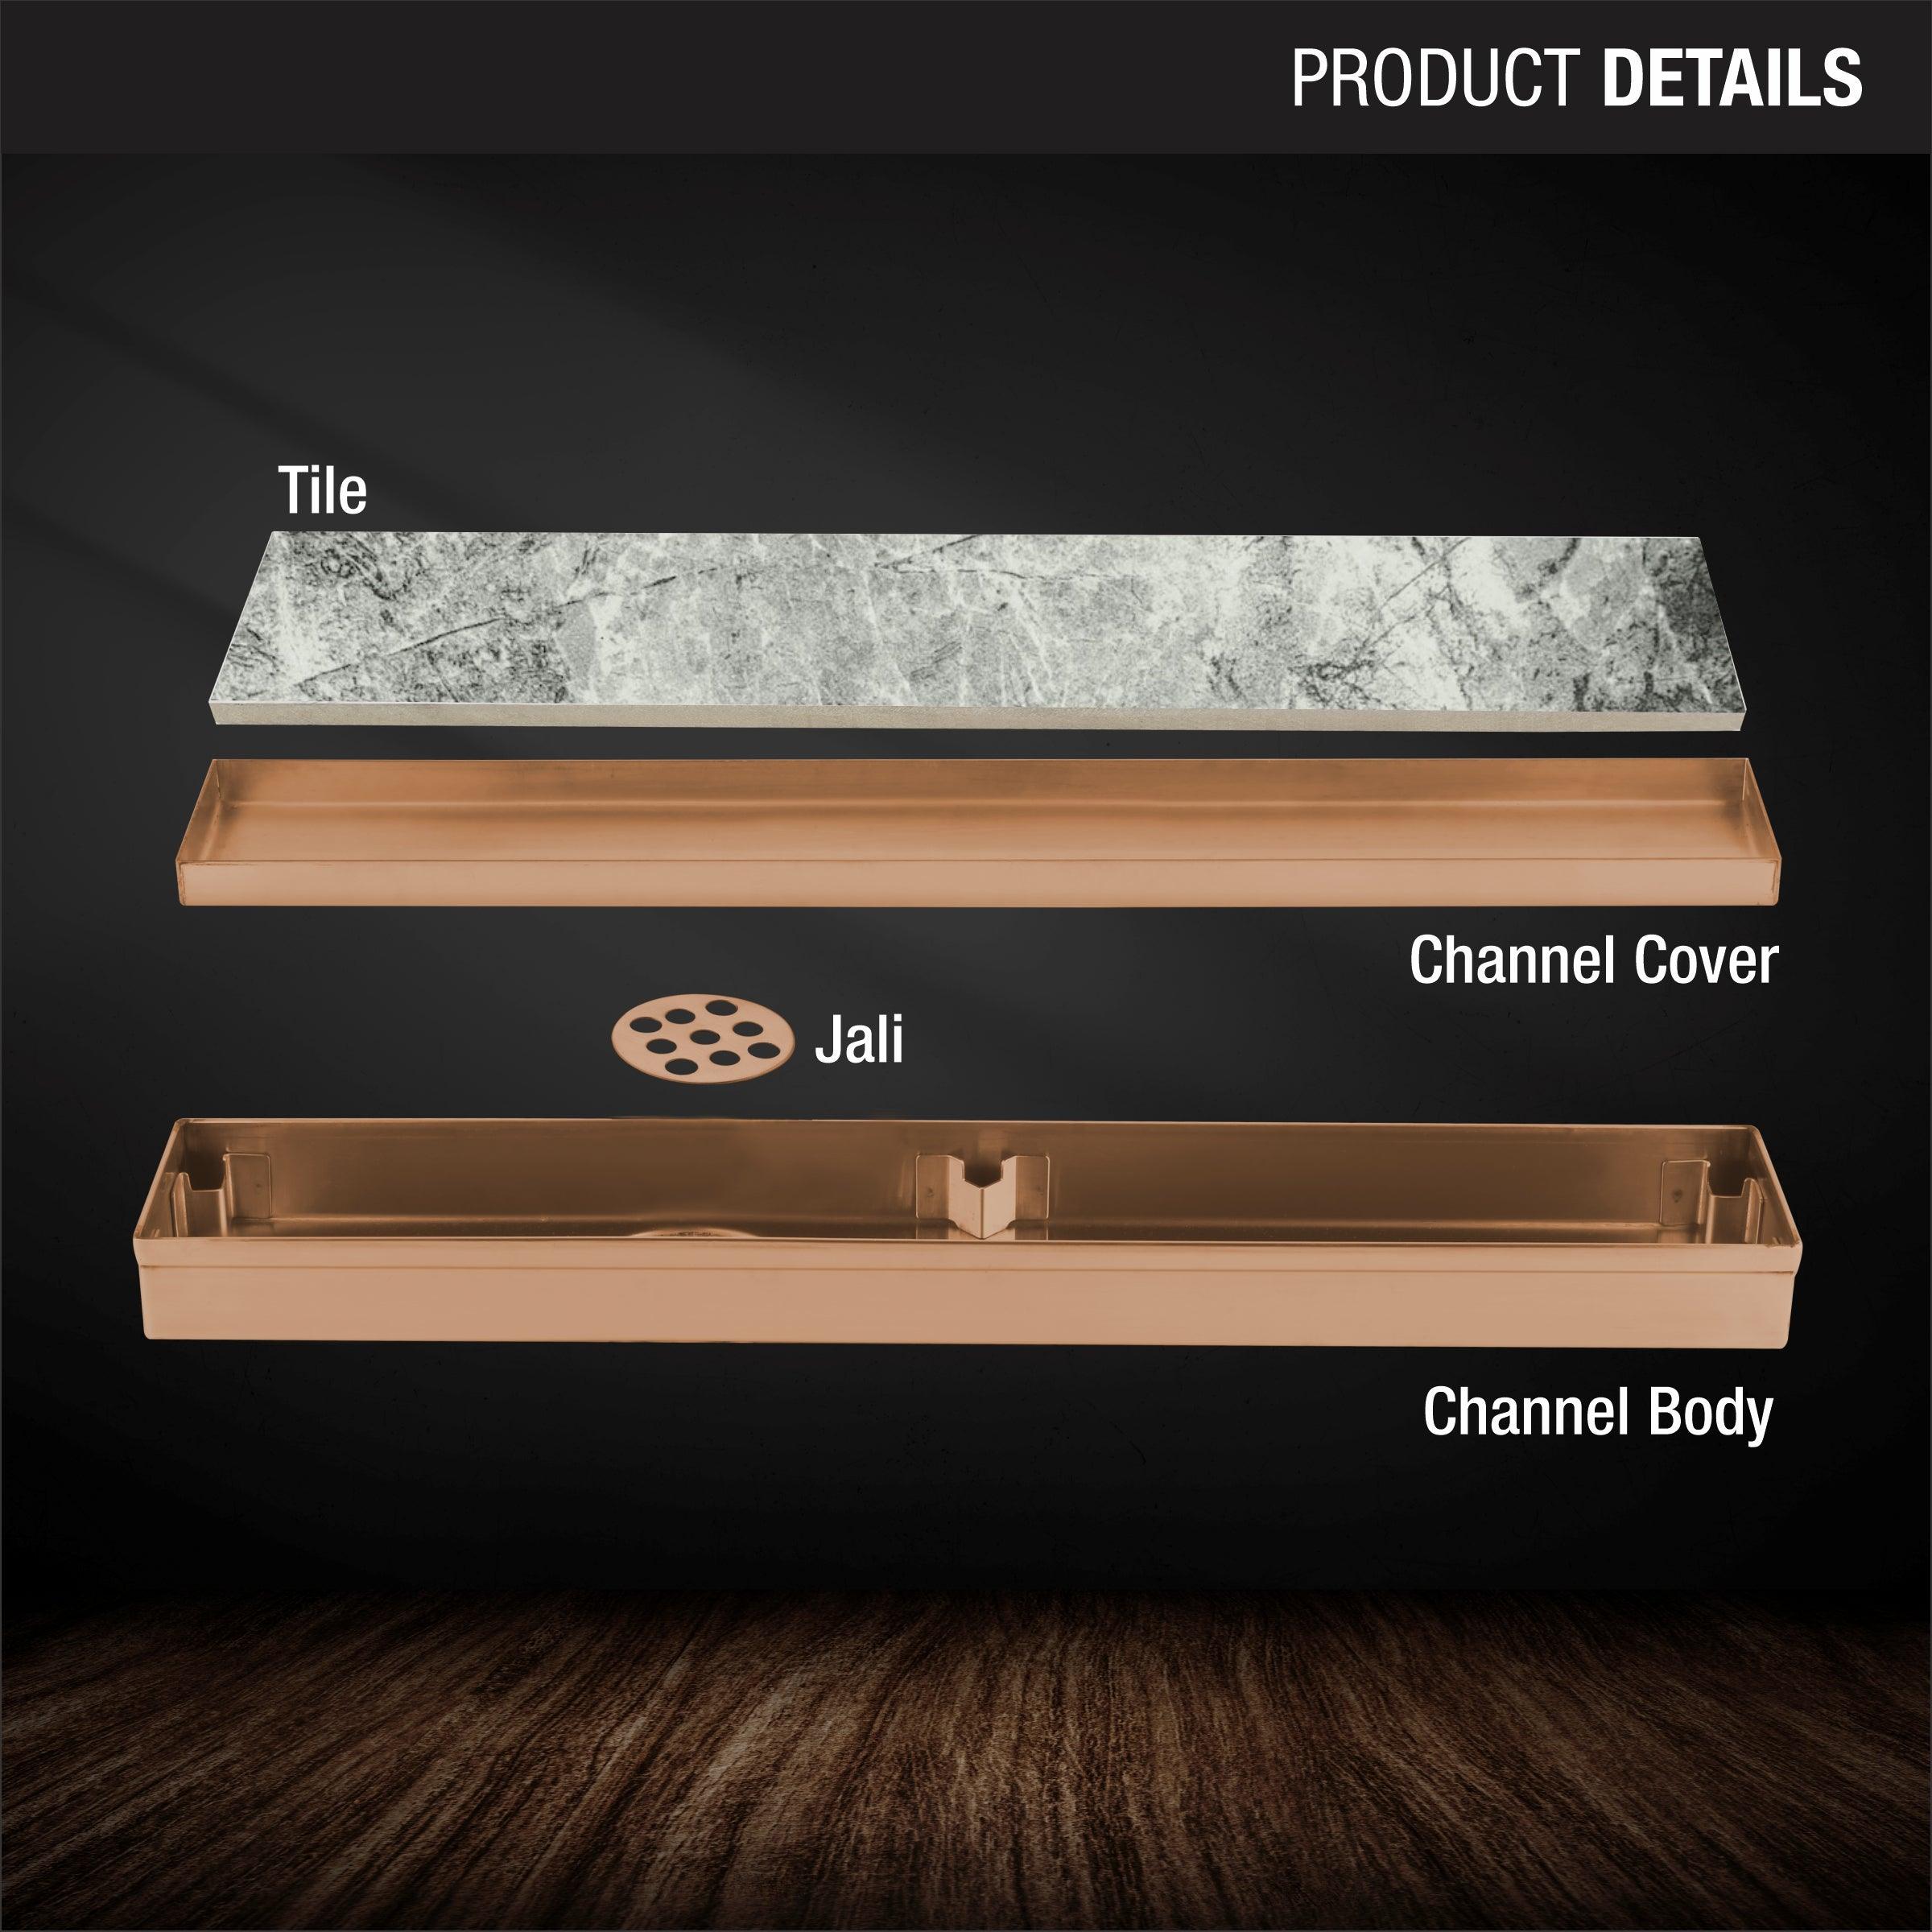 Tile Insert Shower Drain Channel - Antique Copper (40 x 2 Inches) product details